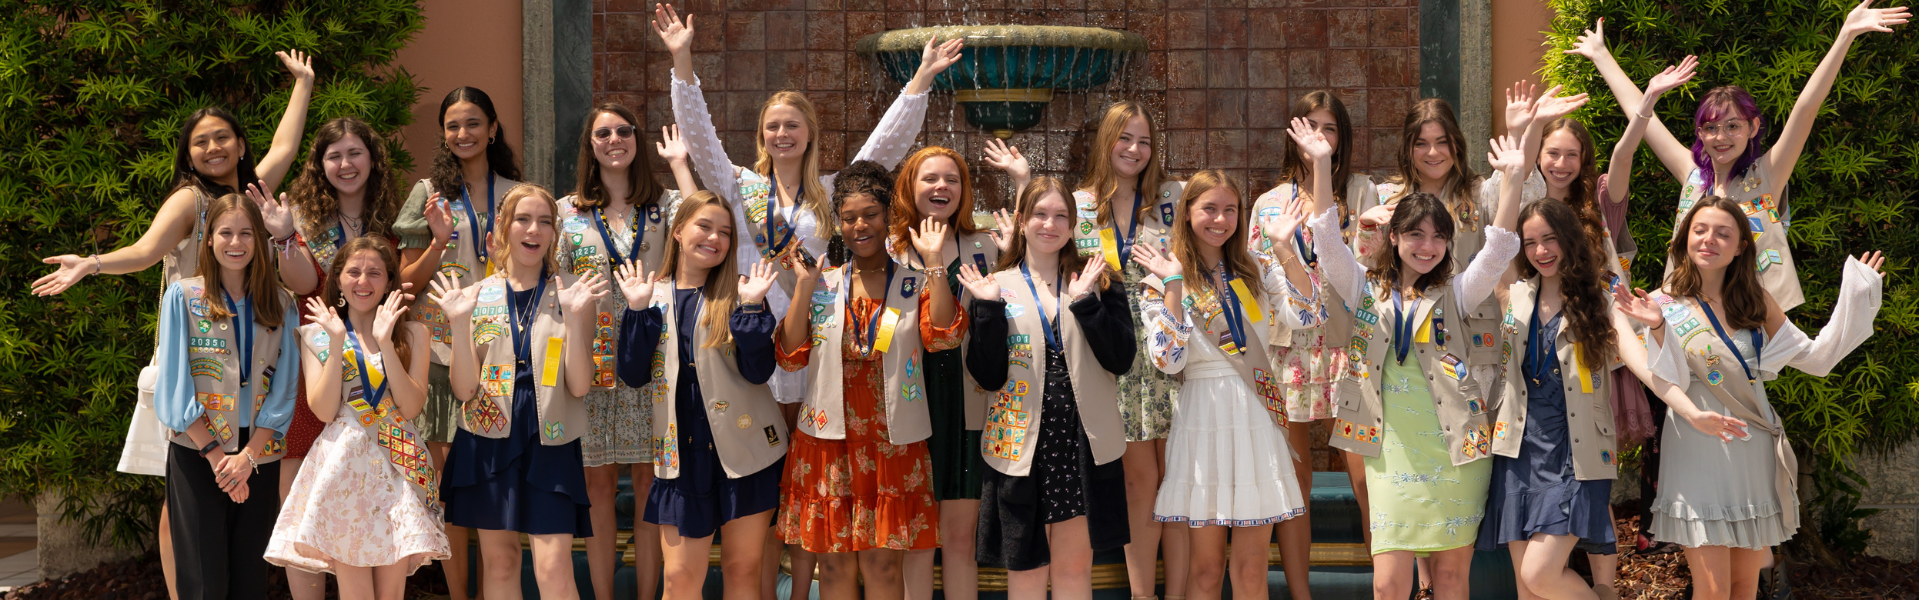  Group of teenage girls in vests celebrating 